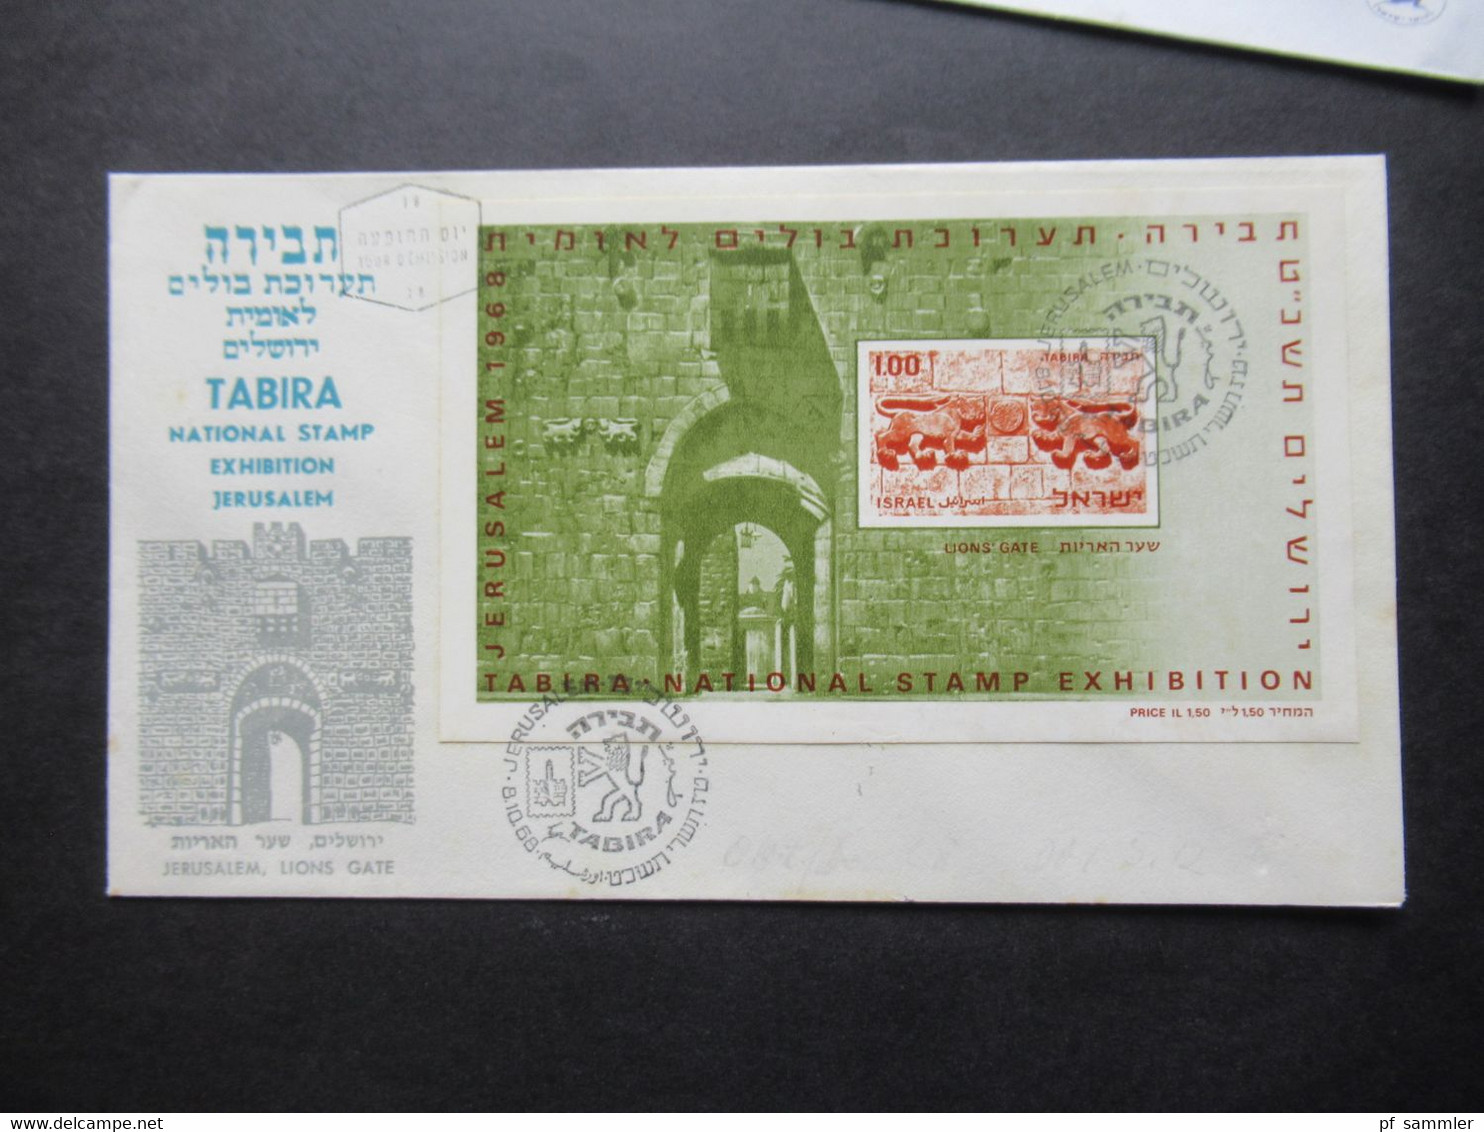 Israel 1970 Motivmarken 2x Block 2 Sonderbelege National Stamp Exhibition Tabit / Tabira / FDC ?? Jerusalem - Storia Postale